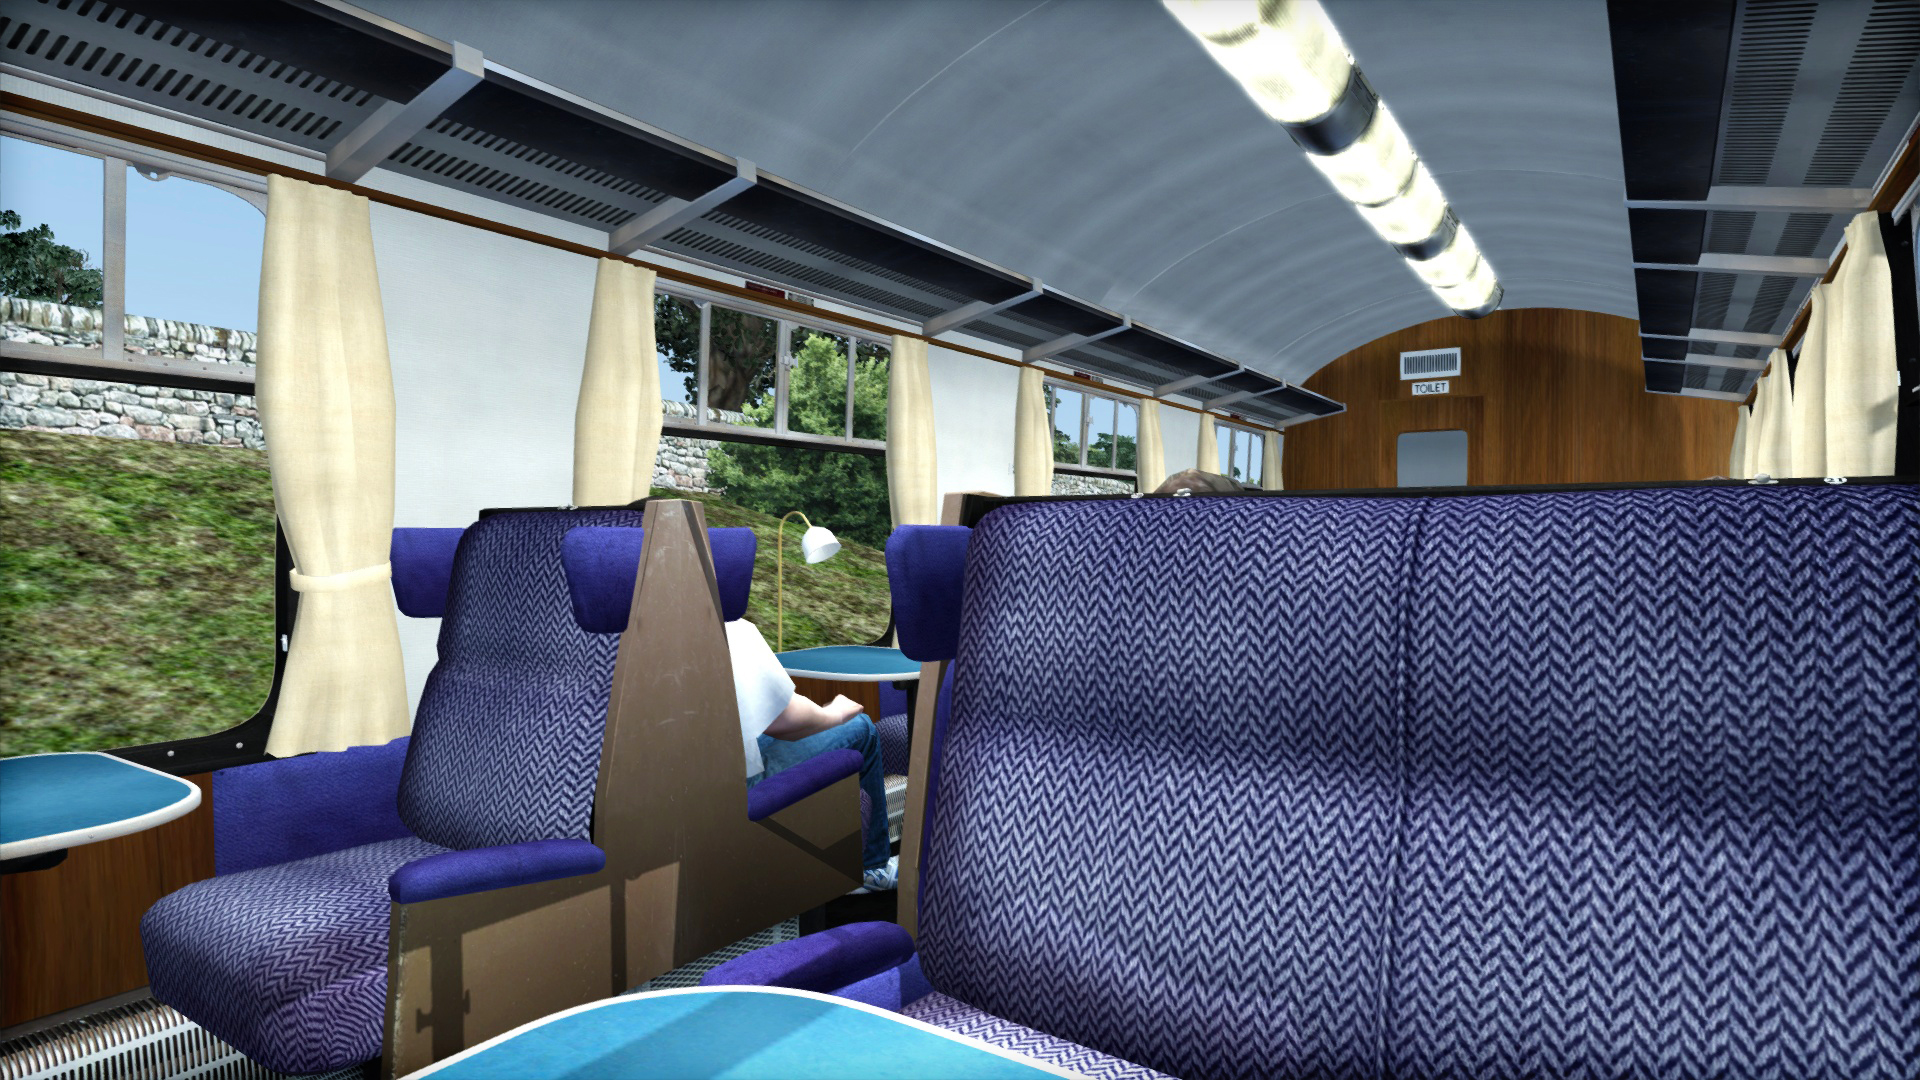 Train Simulator: BR Standard Class 6 ‘Clan Class’ Steam Loco Add-On screenshot